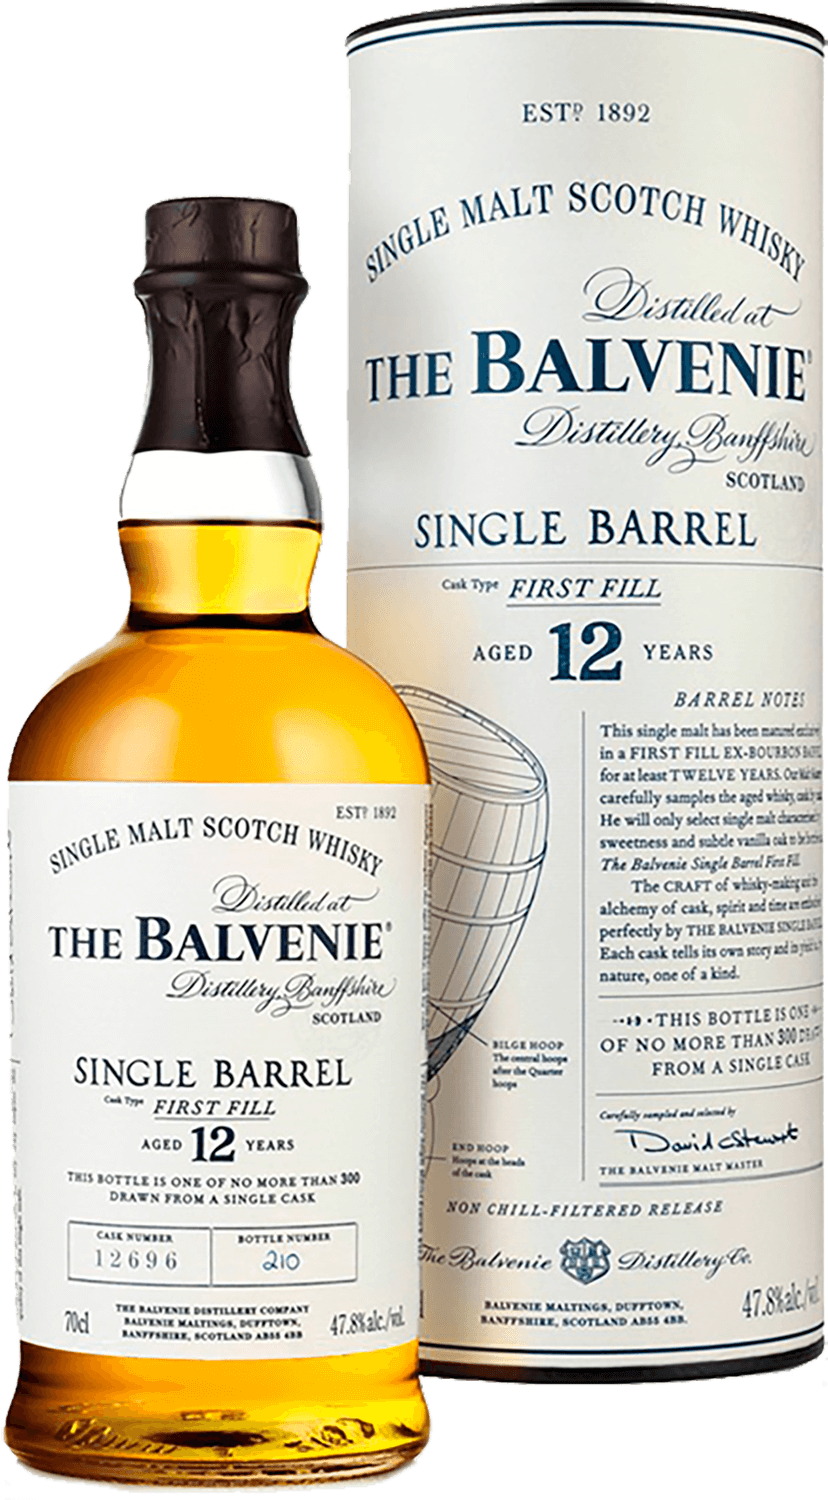 The Balvenie Single Barrel 12 y.o. Single Malt Scotch Whisky (gift box)